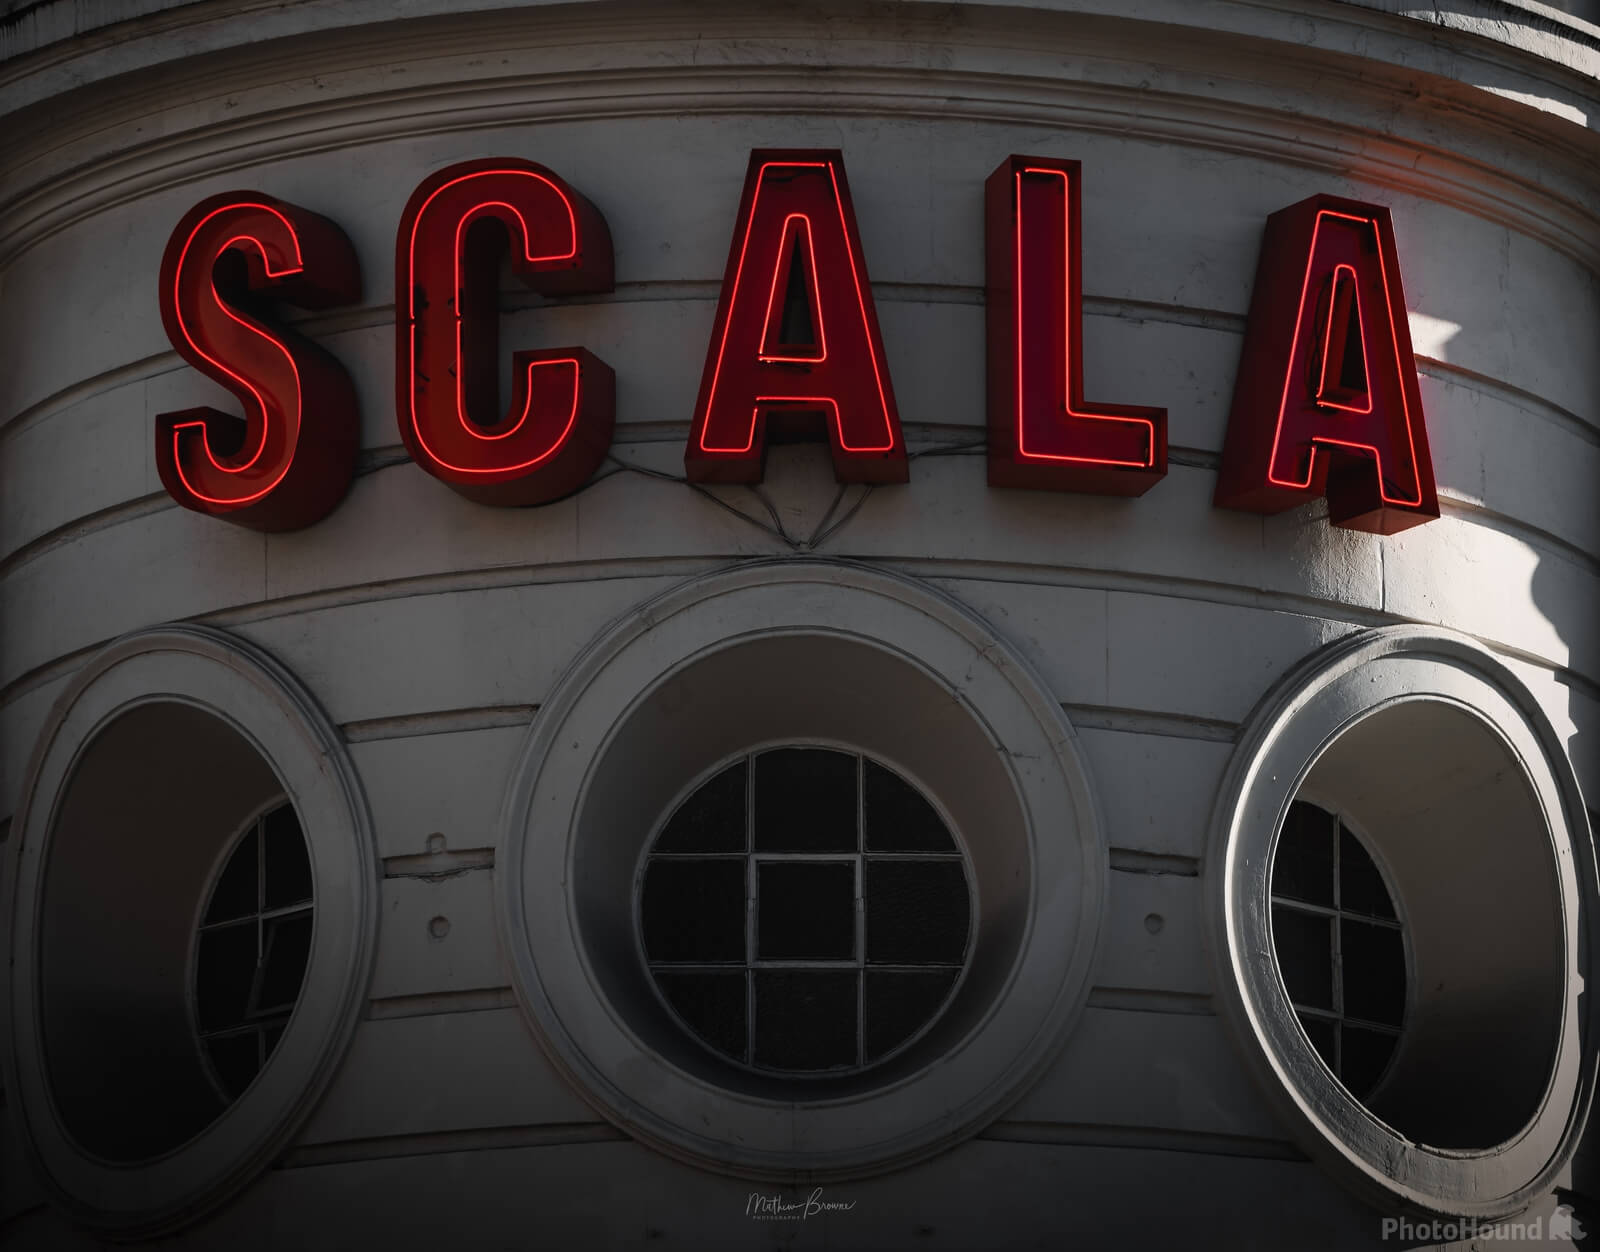 Image of Scala by Mathew Browne